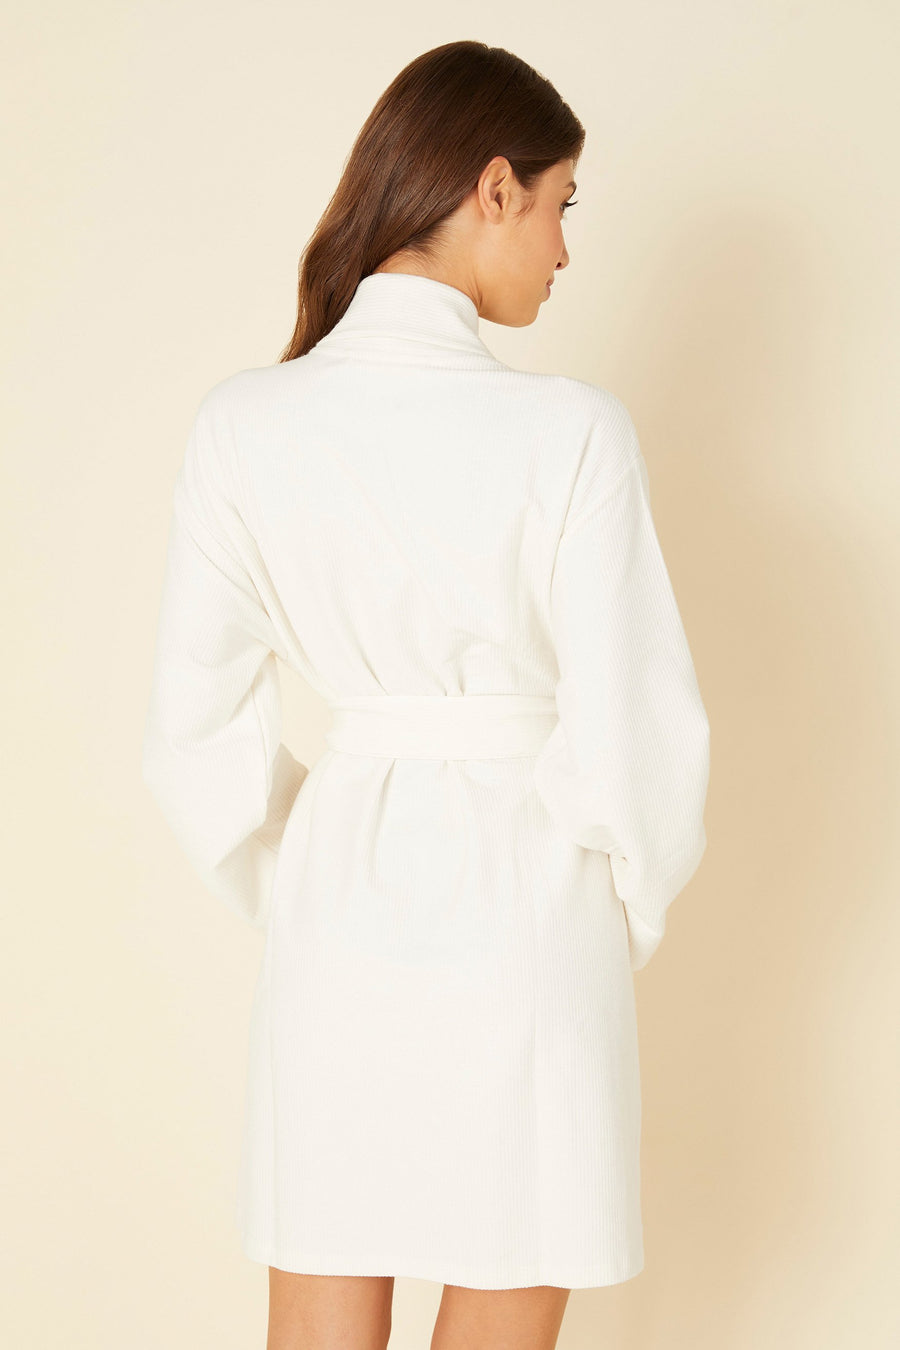 Blanc Robe De Chambre - Cozy Robe De Chambre Style Tricot